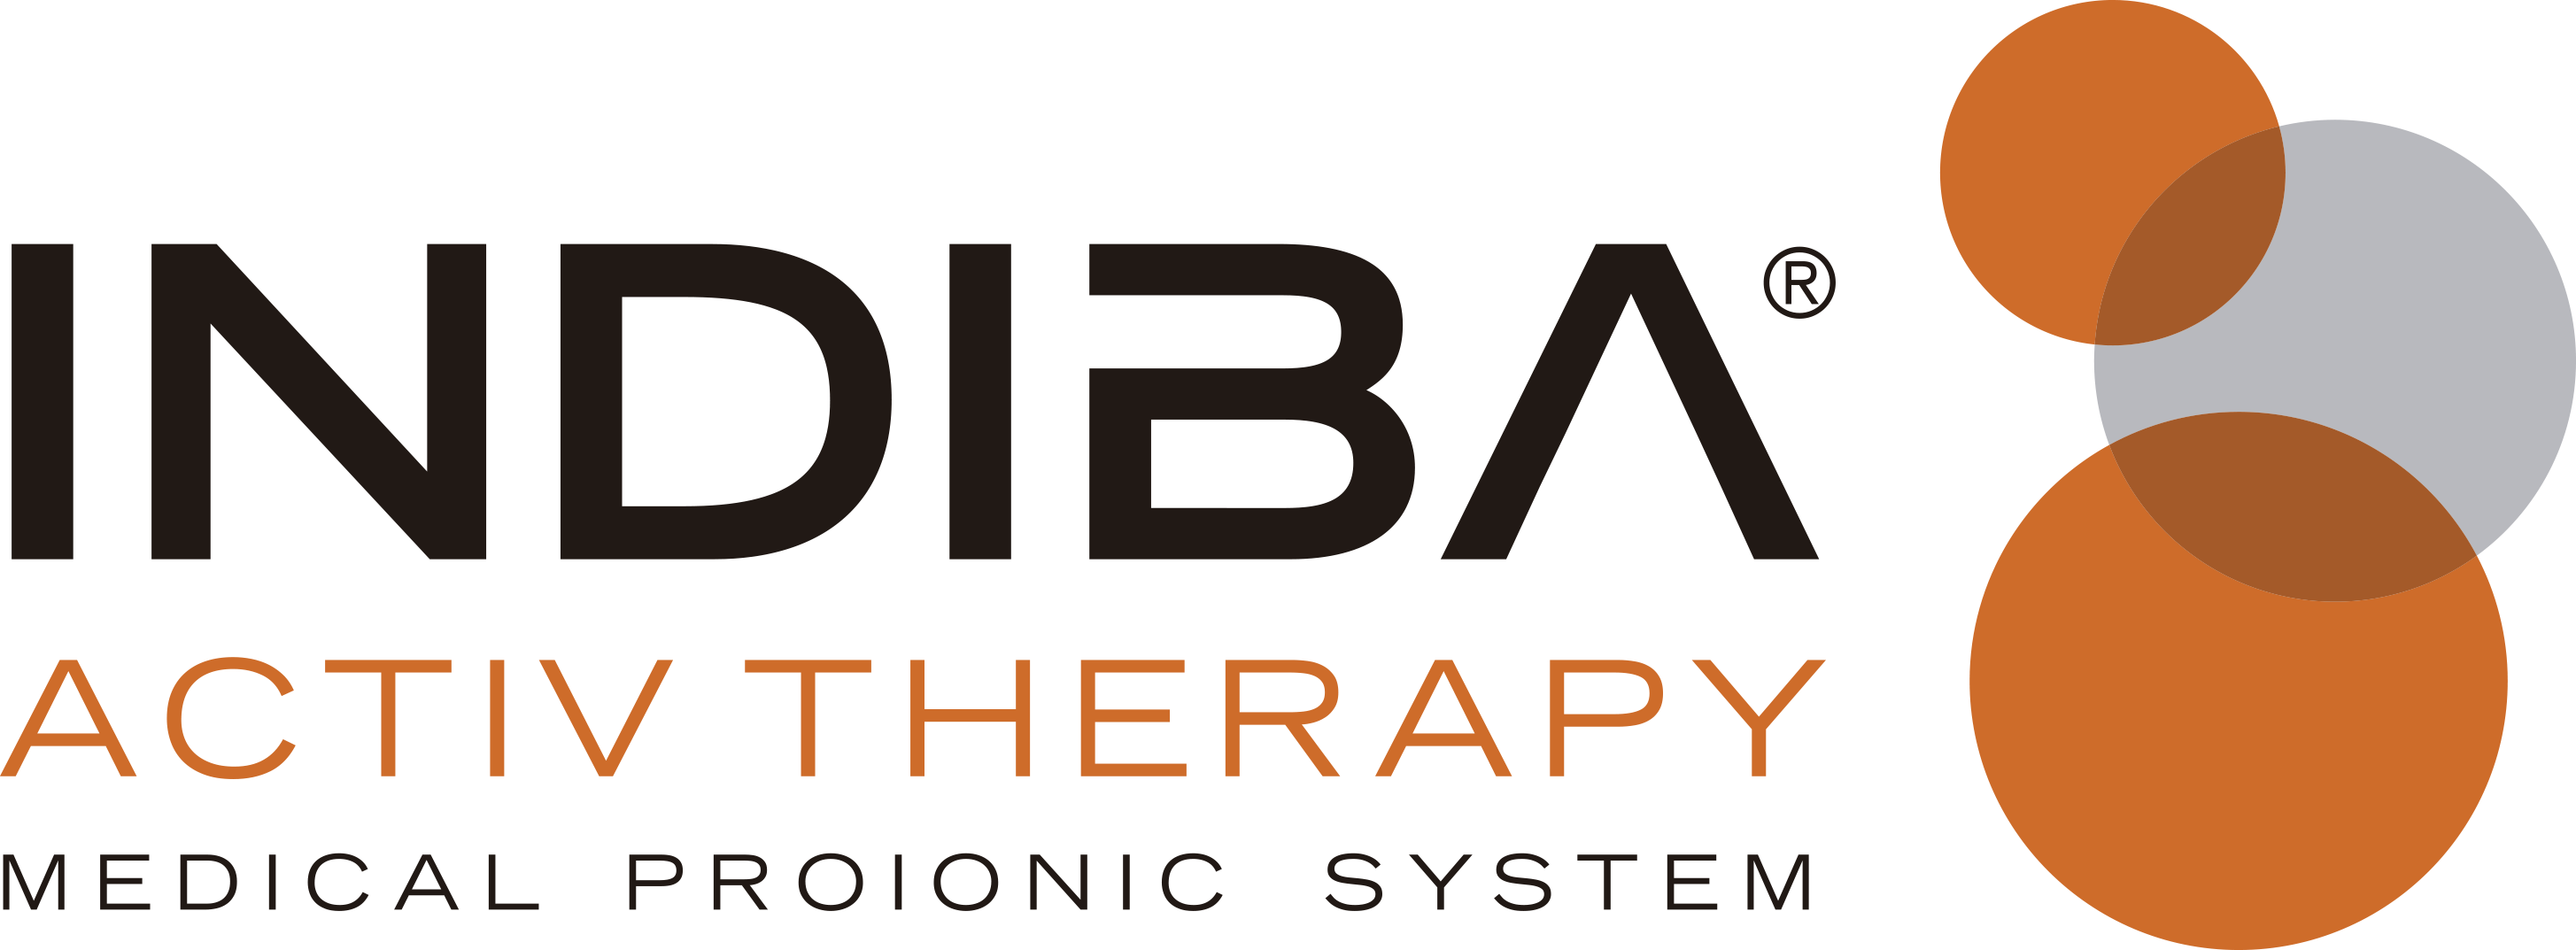 Indiba-activ therapy